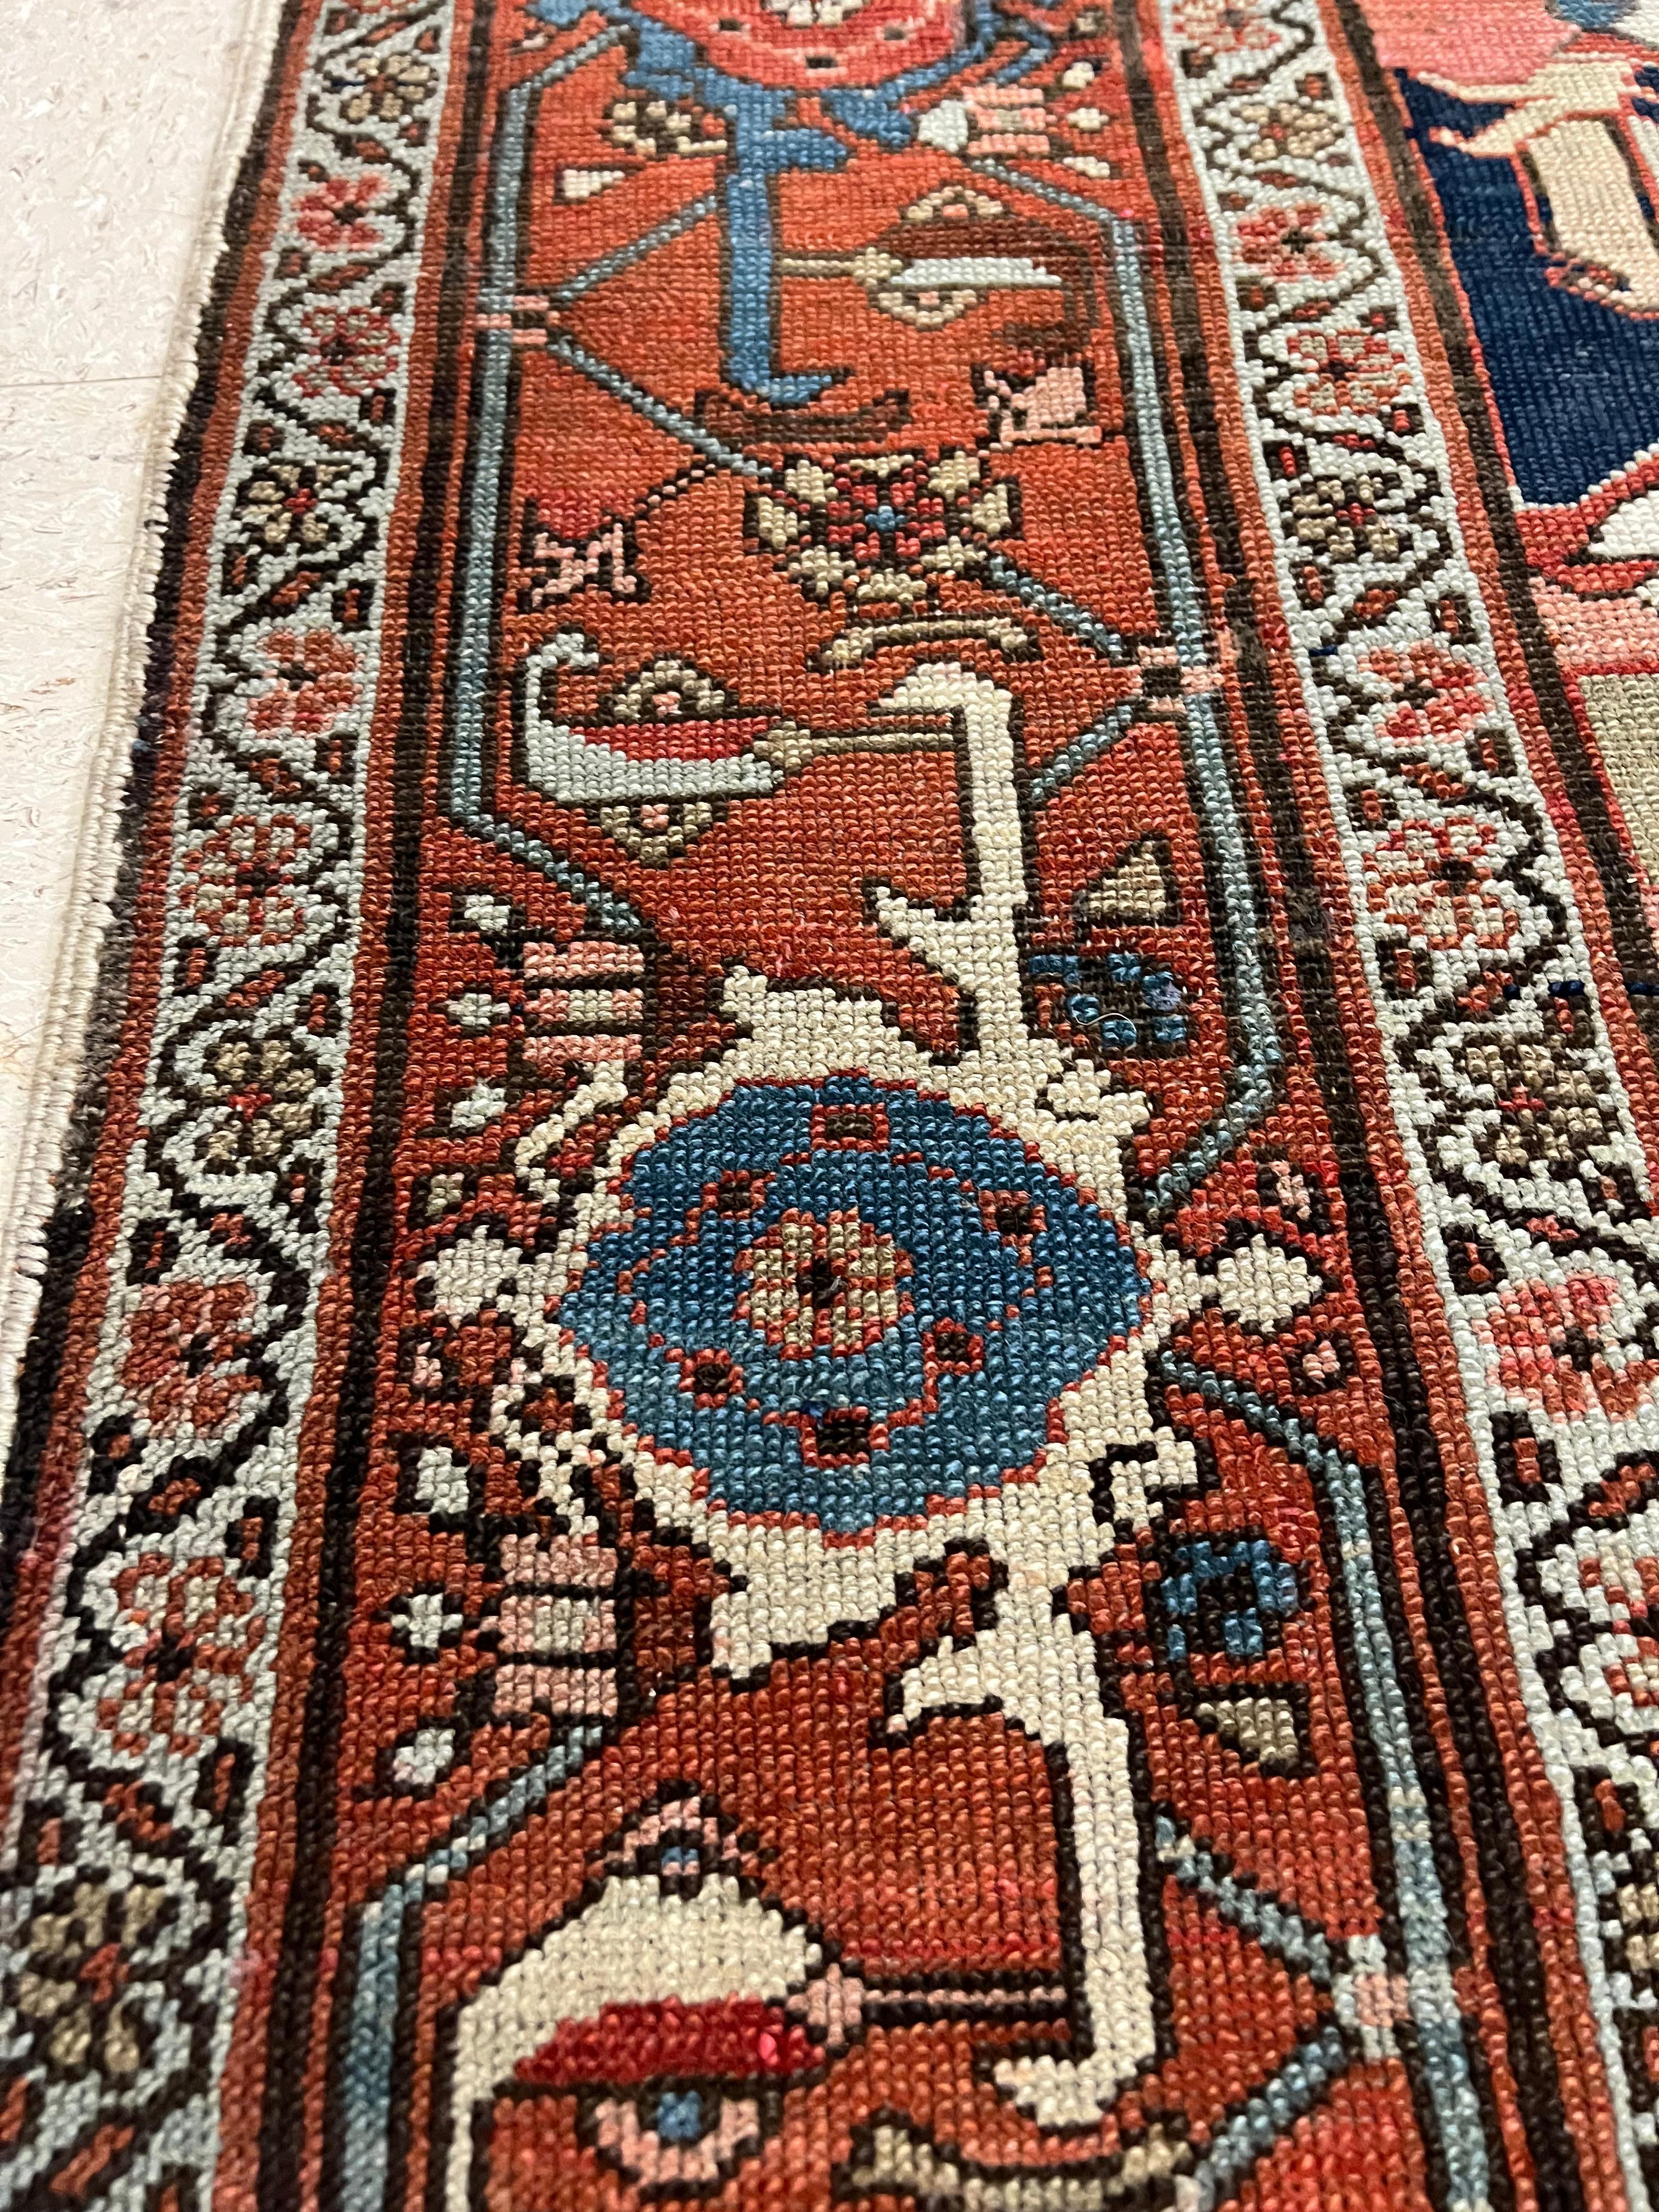 19th Century Antique Persian Serapi Carpet, Handmade, Oriental Rug, Rust, Ivory, Light Blue For Sale